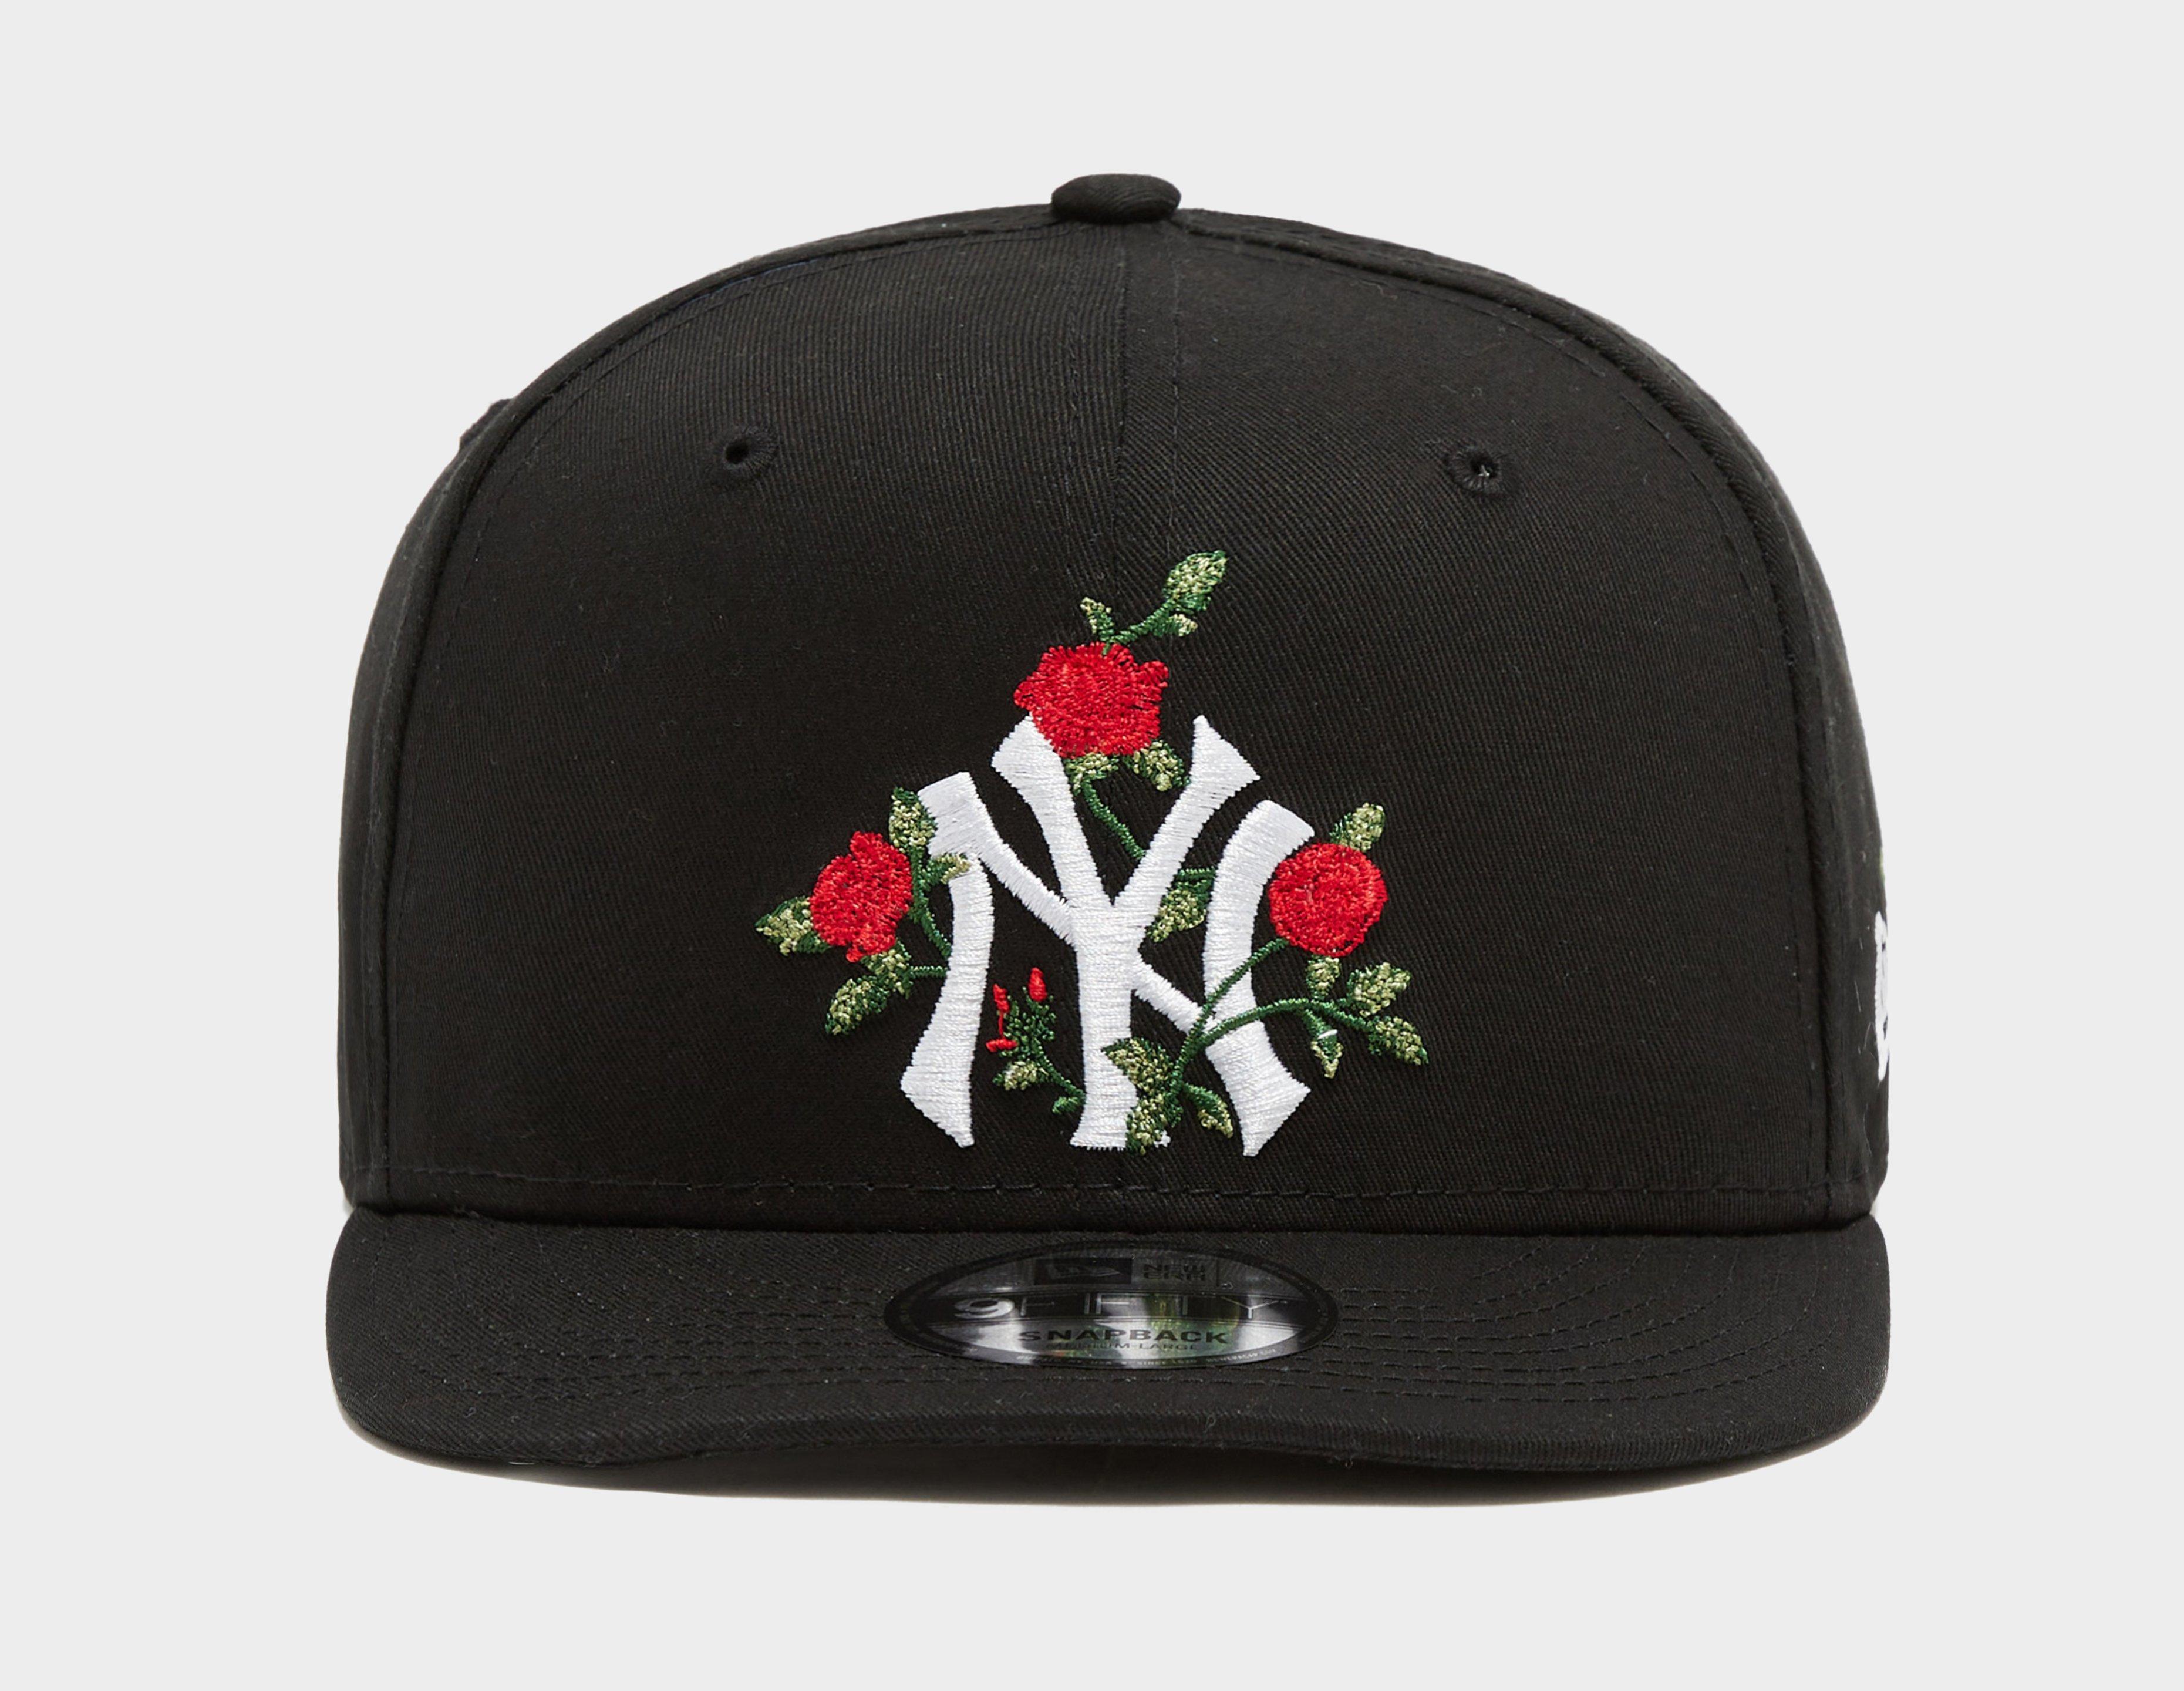 hat New | cap Flower York medusa Era Healthdesign? versace Yankees | Cap head 9FIFTY New Black